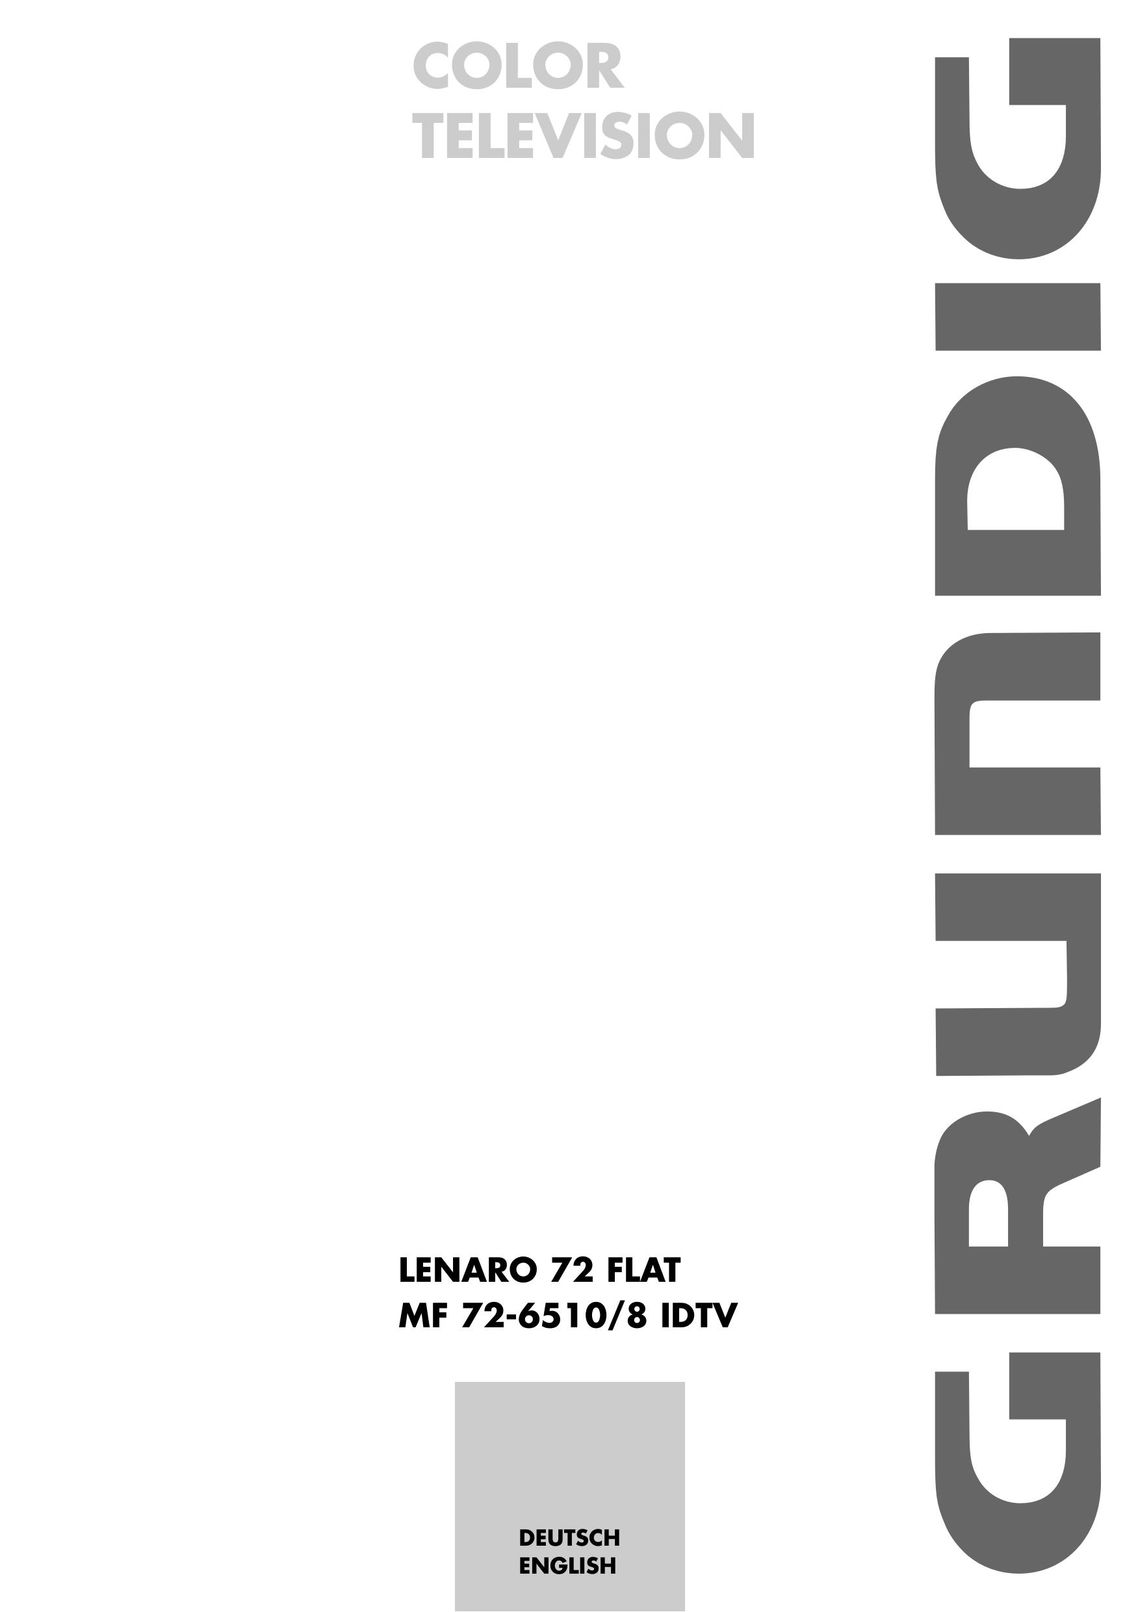 Grundig MF 72-6510/8 CRT Television User Manual